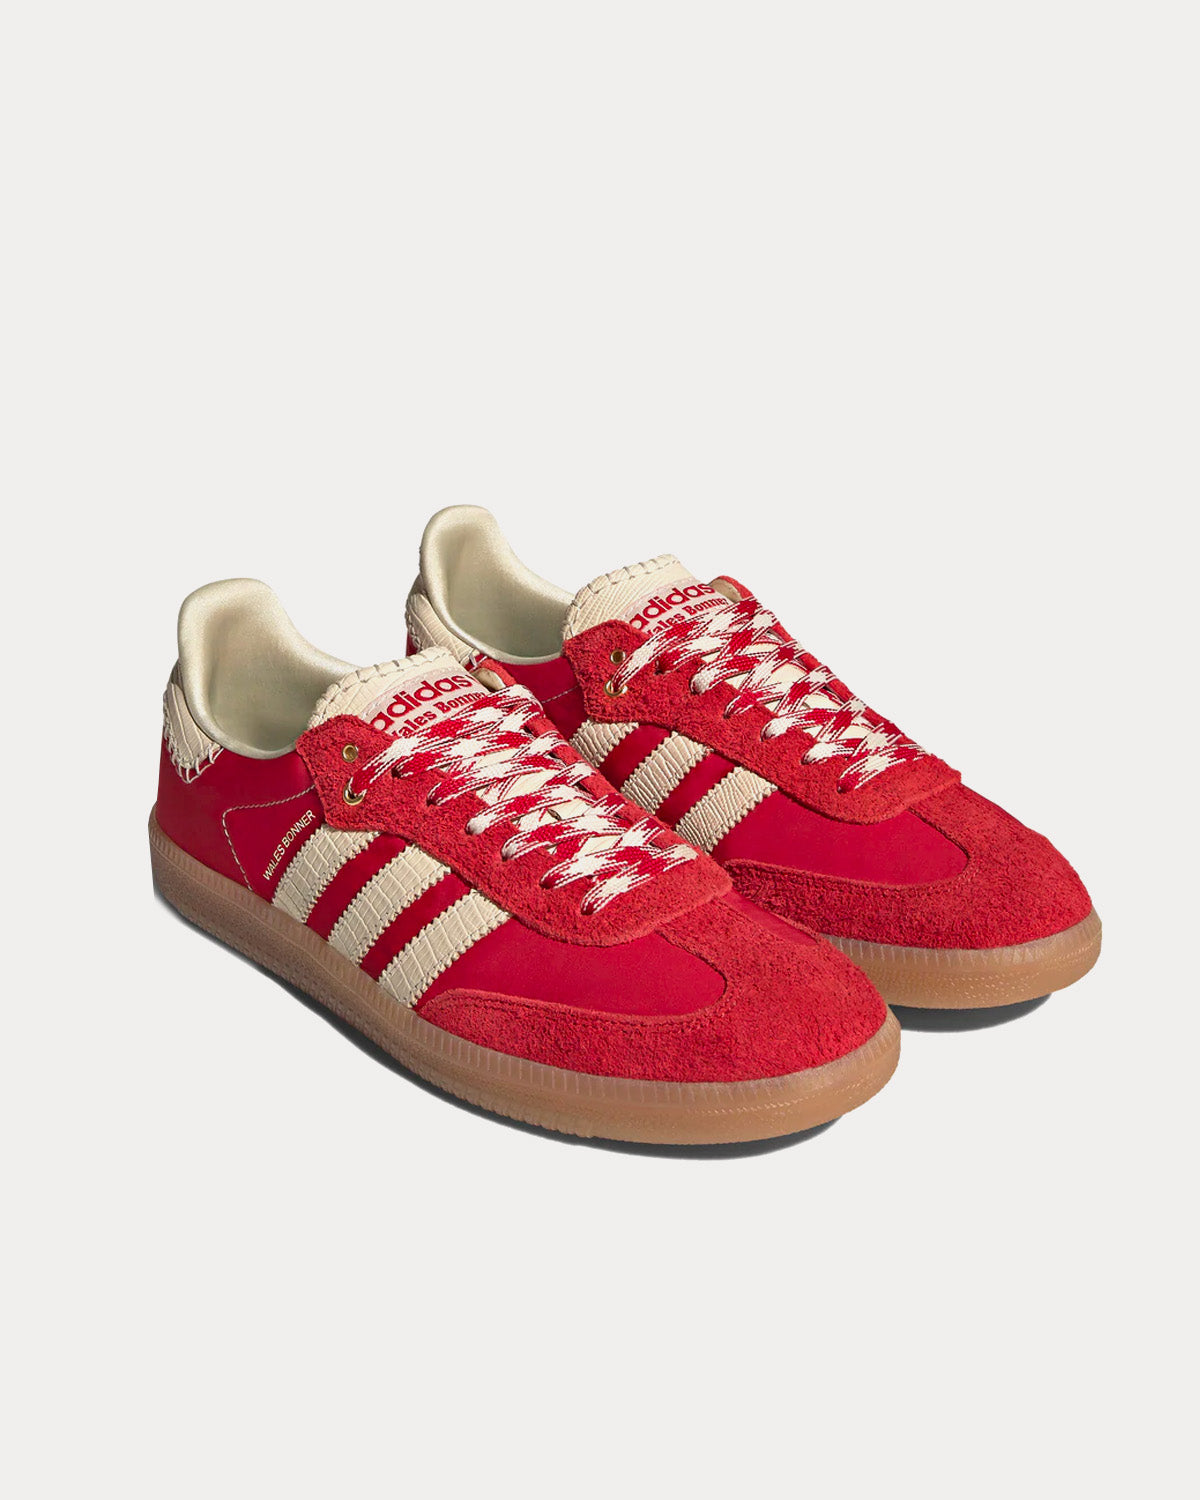 Adidas x Wales Bonner Samba Ecru / Scarlet Low Top Sneakers 